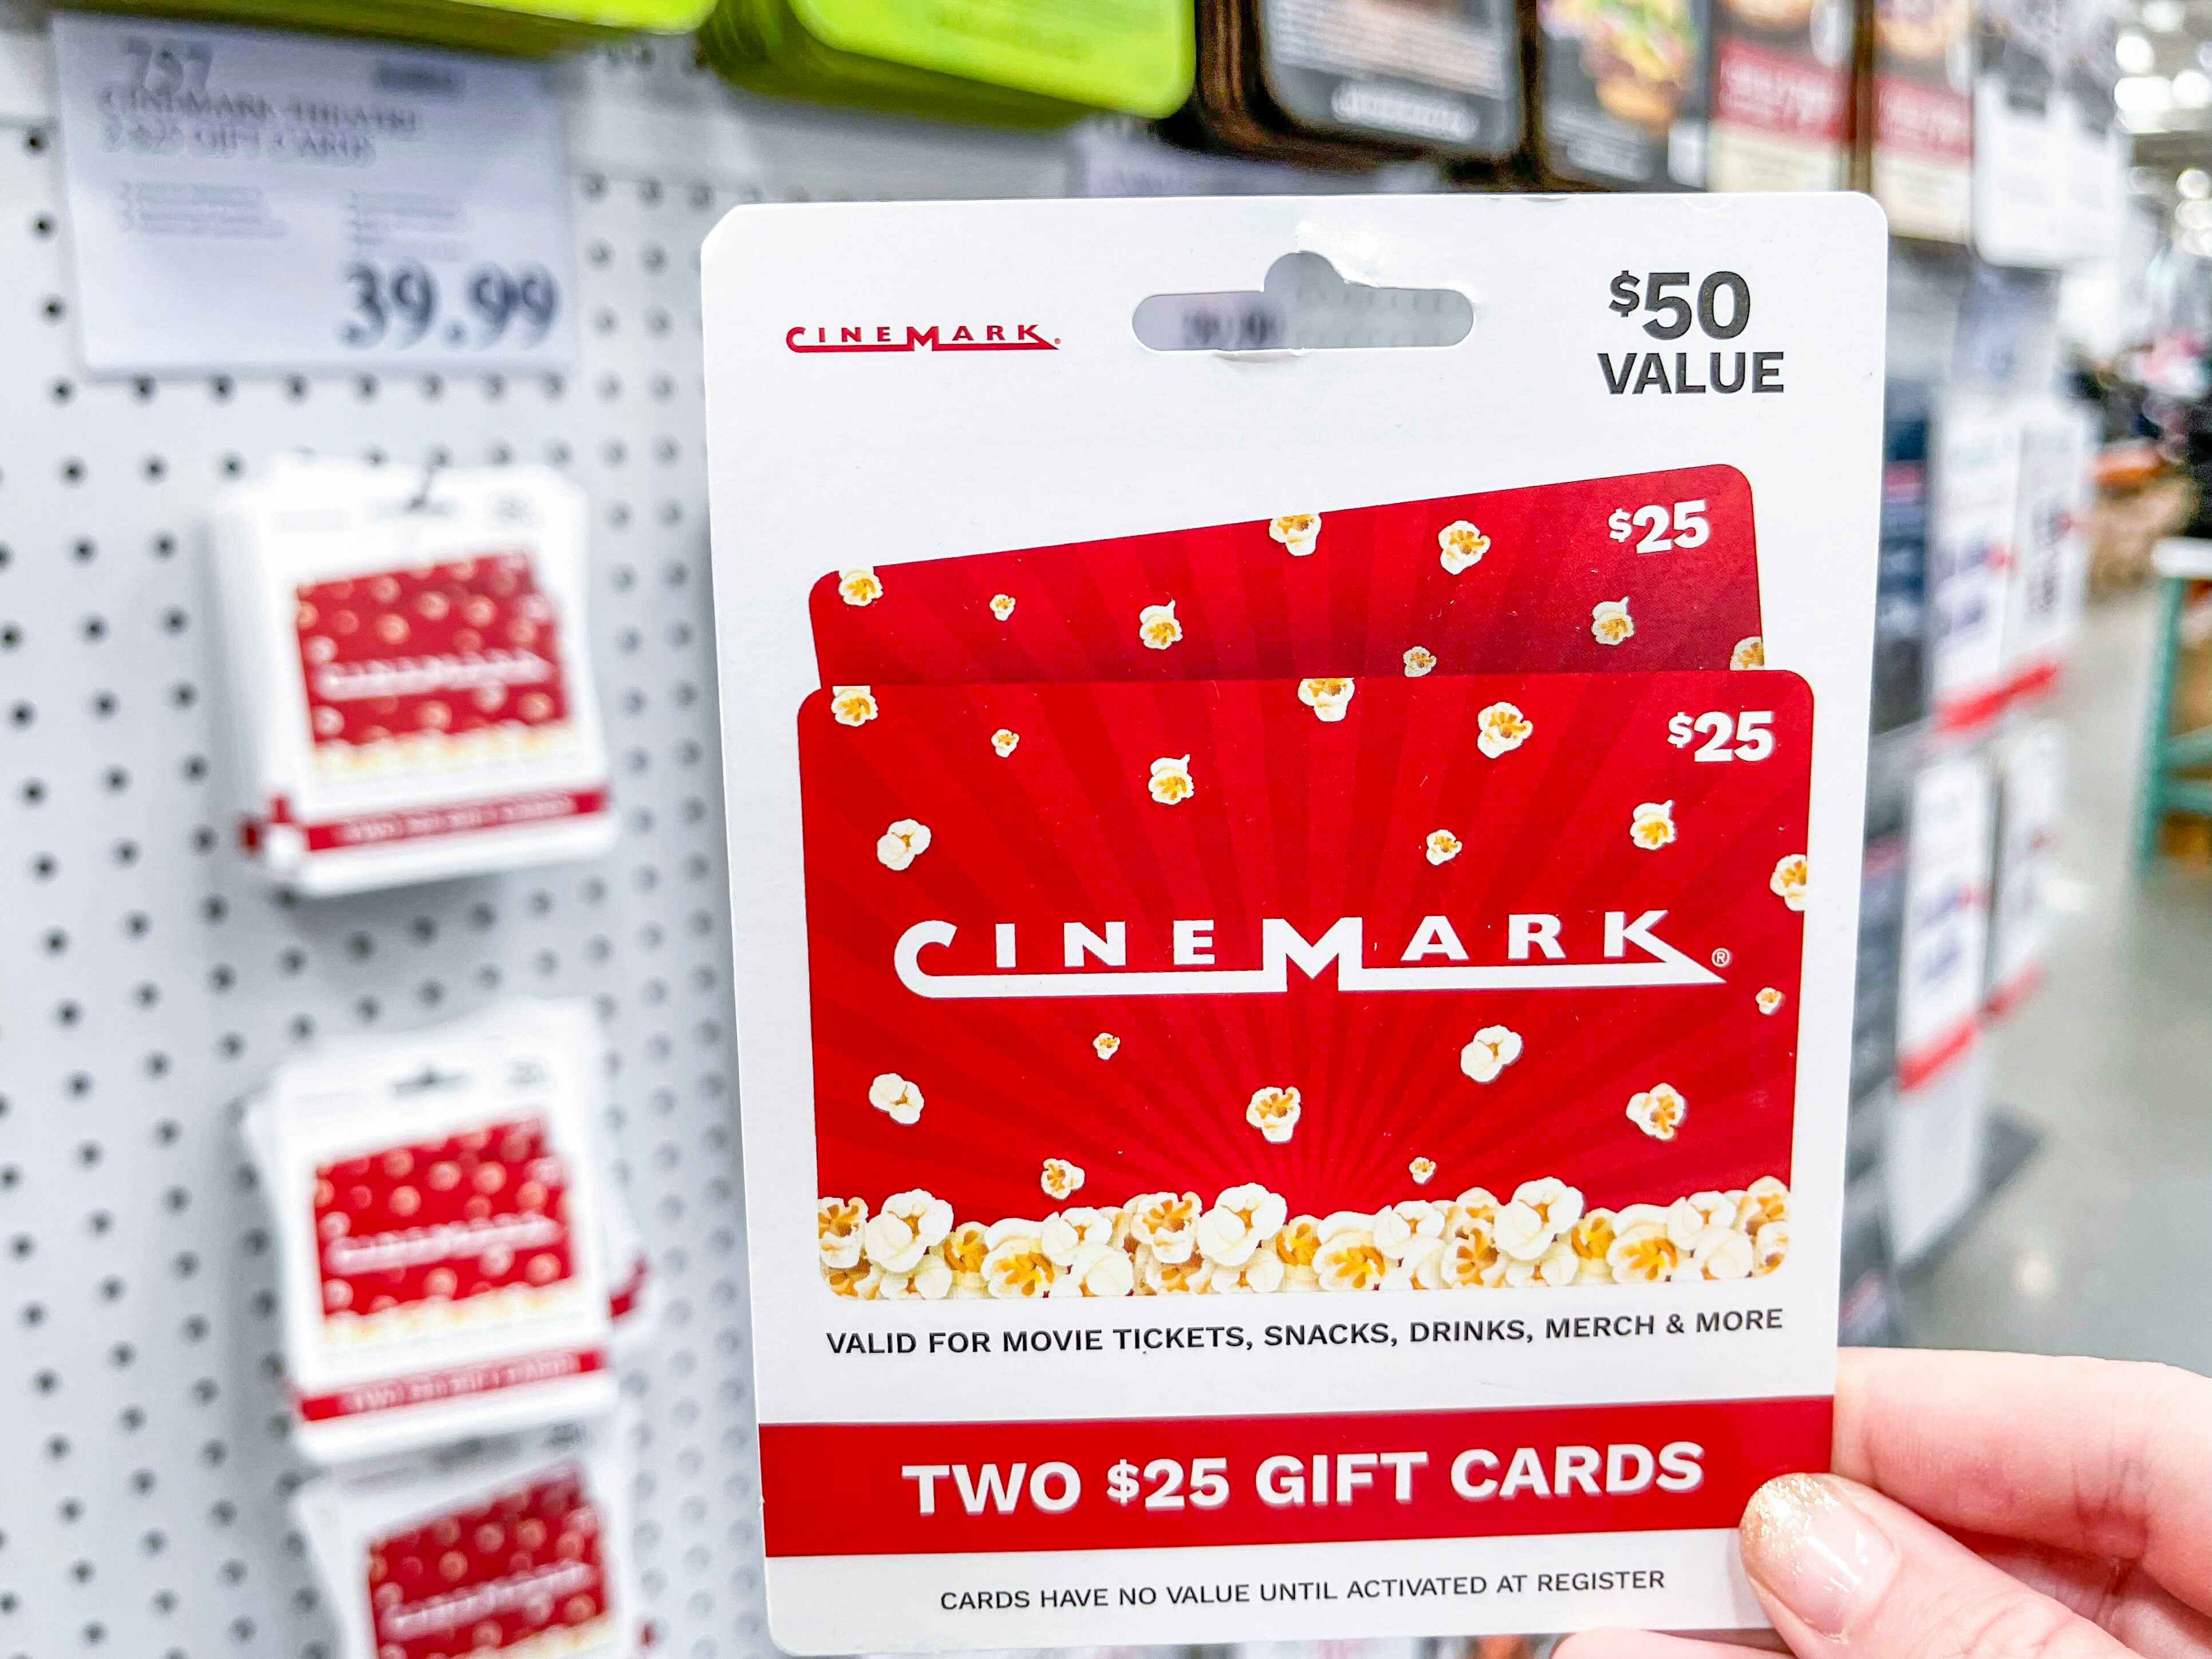 Costco Cinemark Gift Cards at Costco